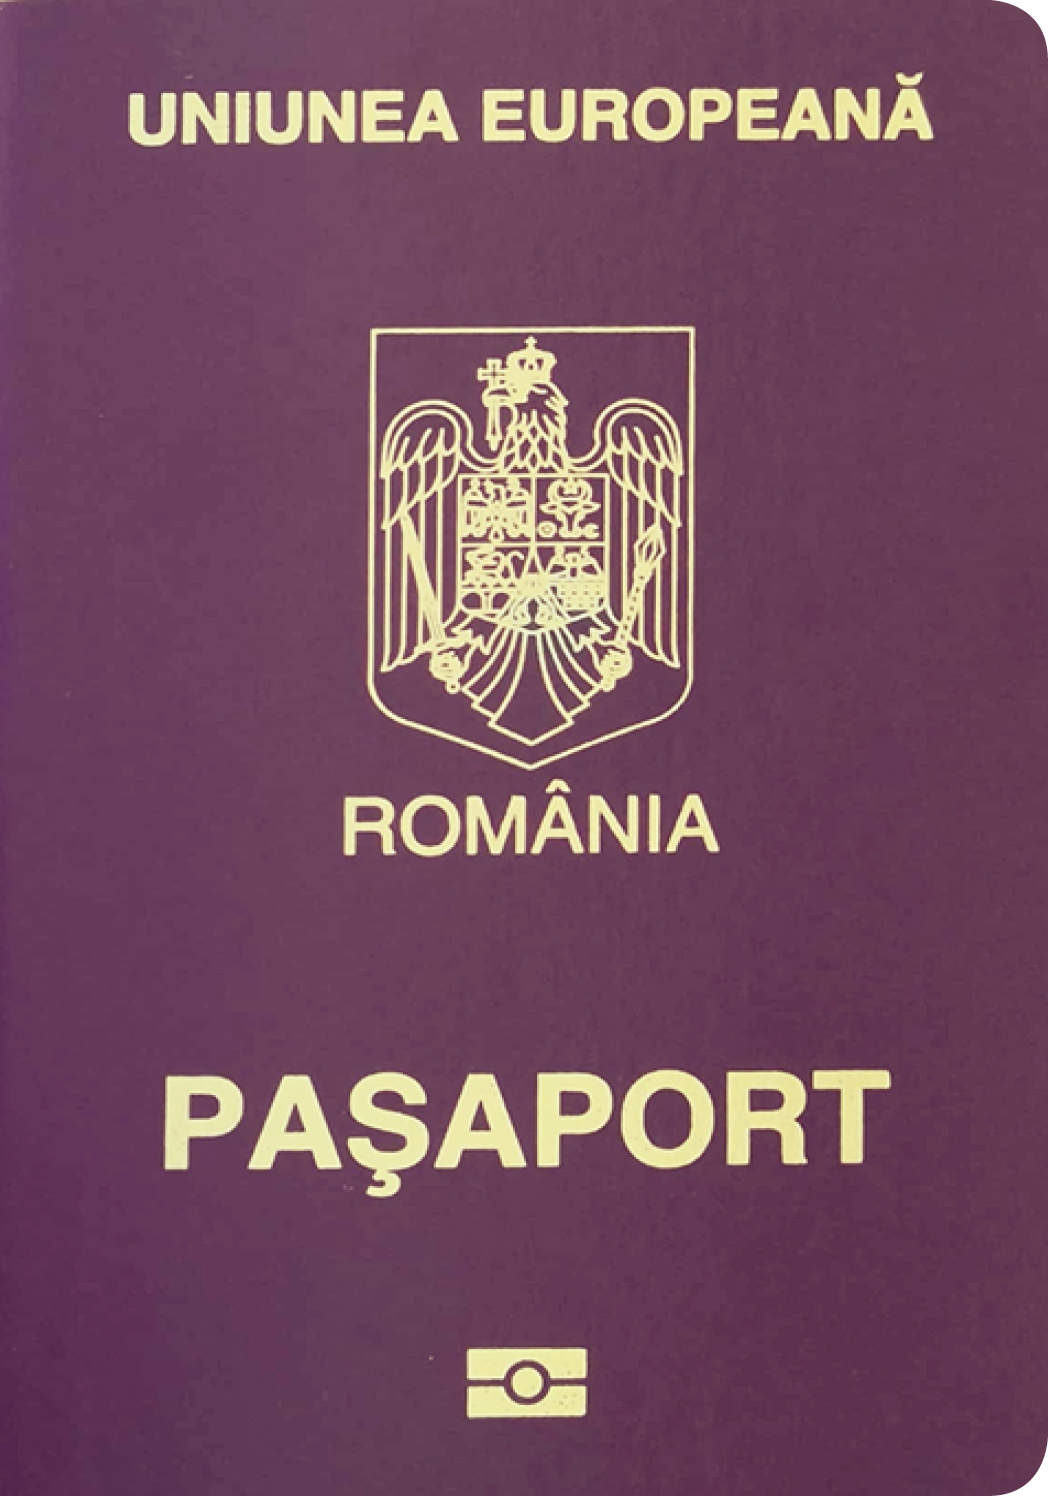 A regular or ordinary Romanian passport - Front side